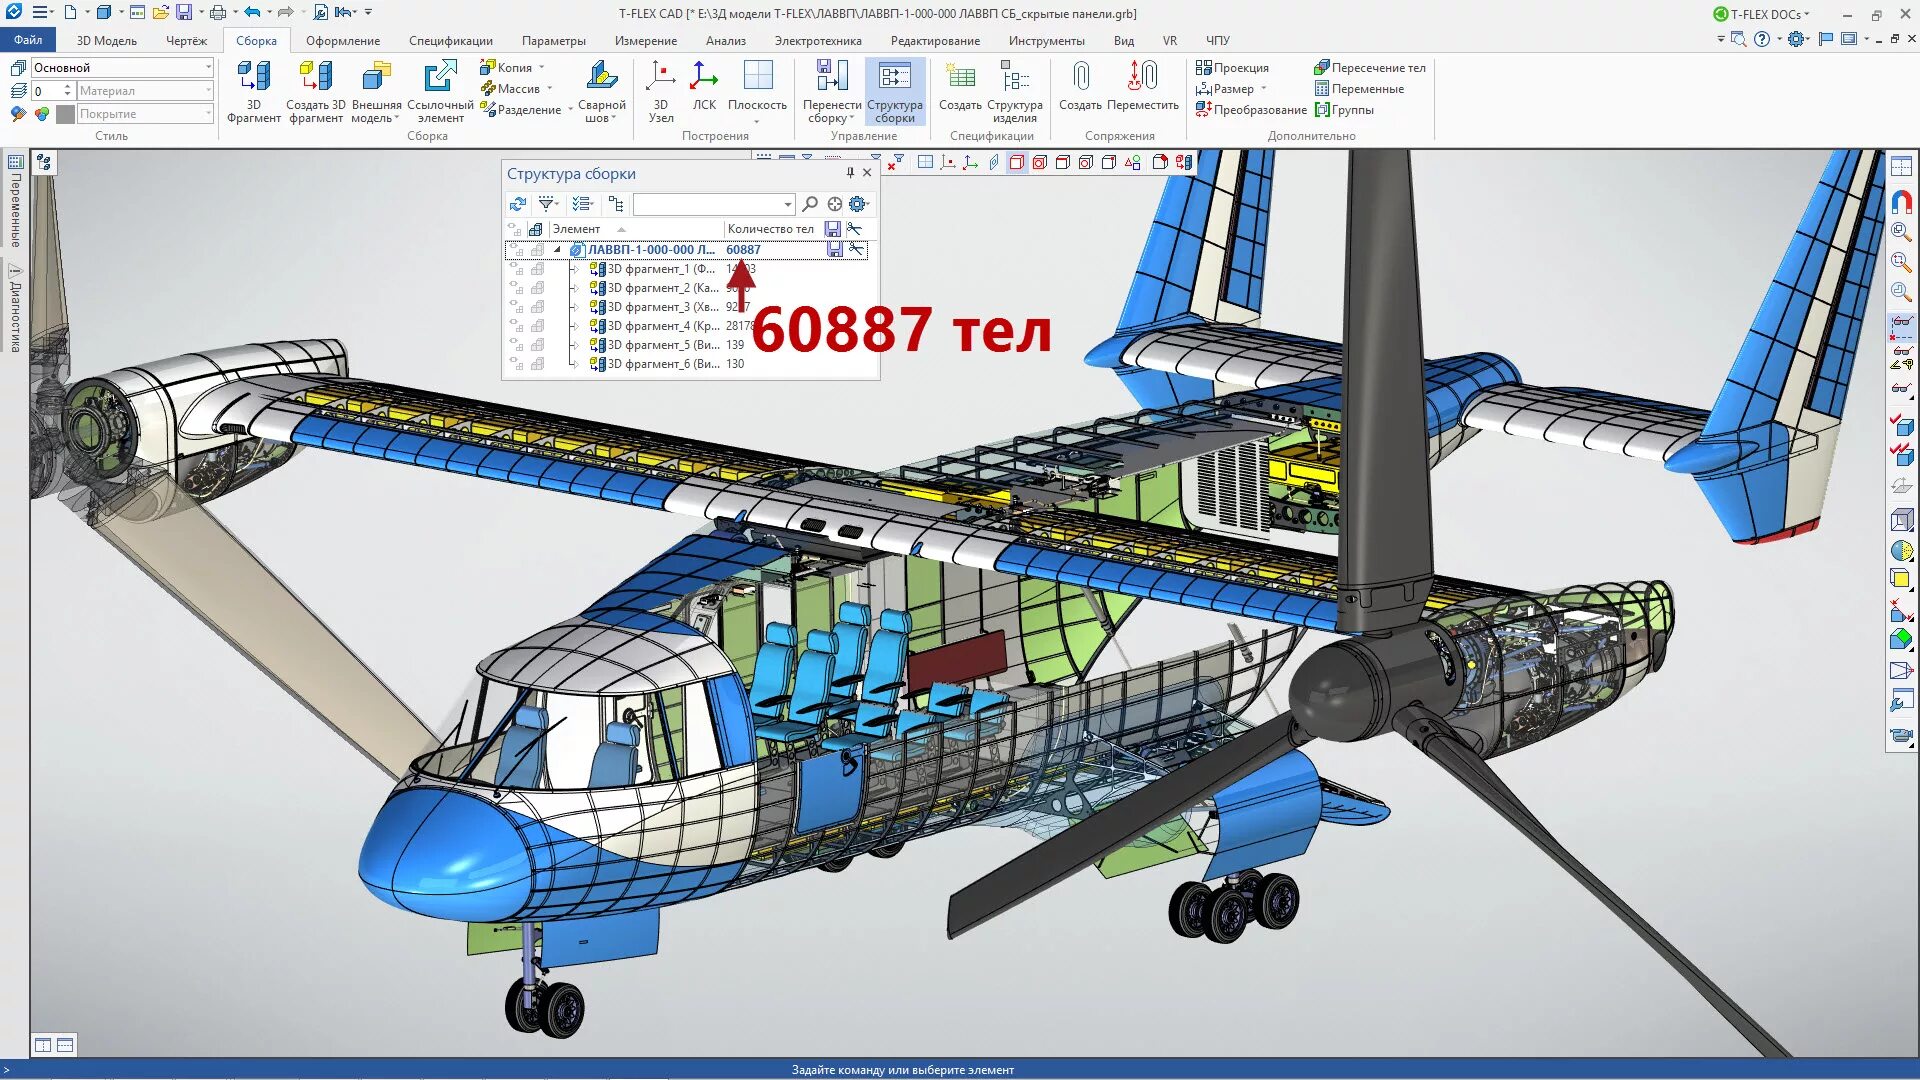 САПР T-Flex CAD. 3d моделирование t-Flex CAD. T-Flex CAD 16.0.32.0. T-Flex CAD 16. Модели технических объектов